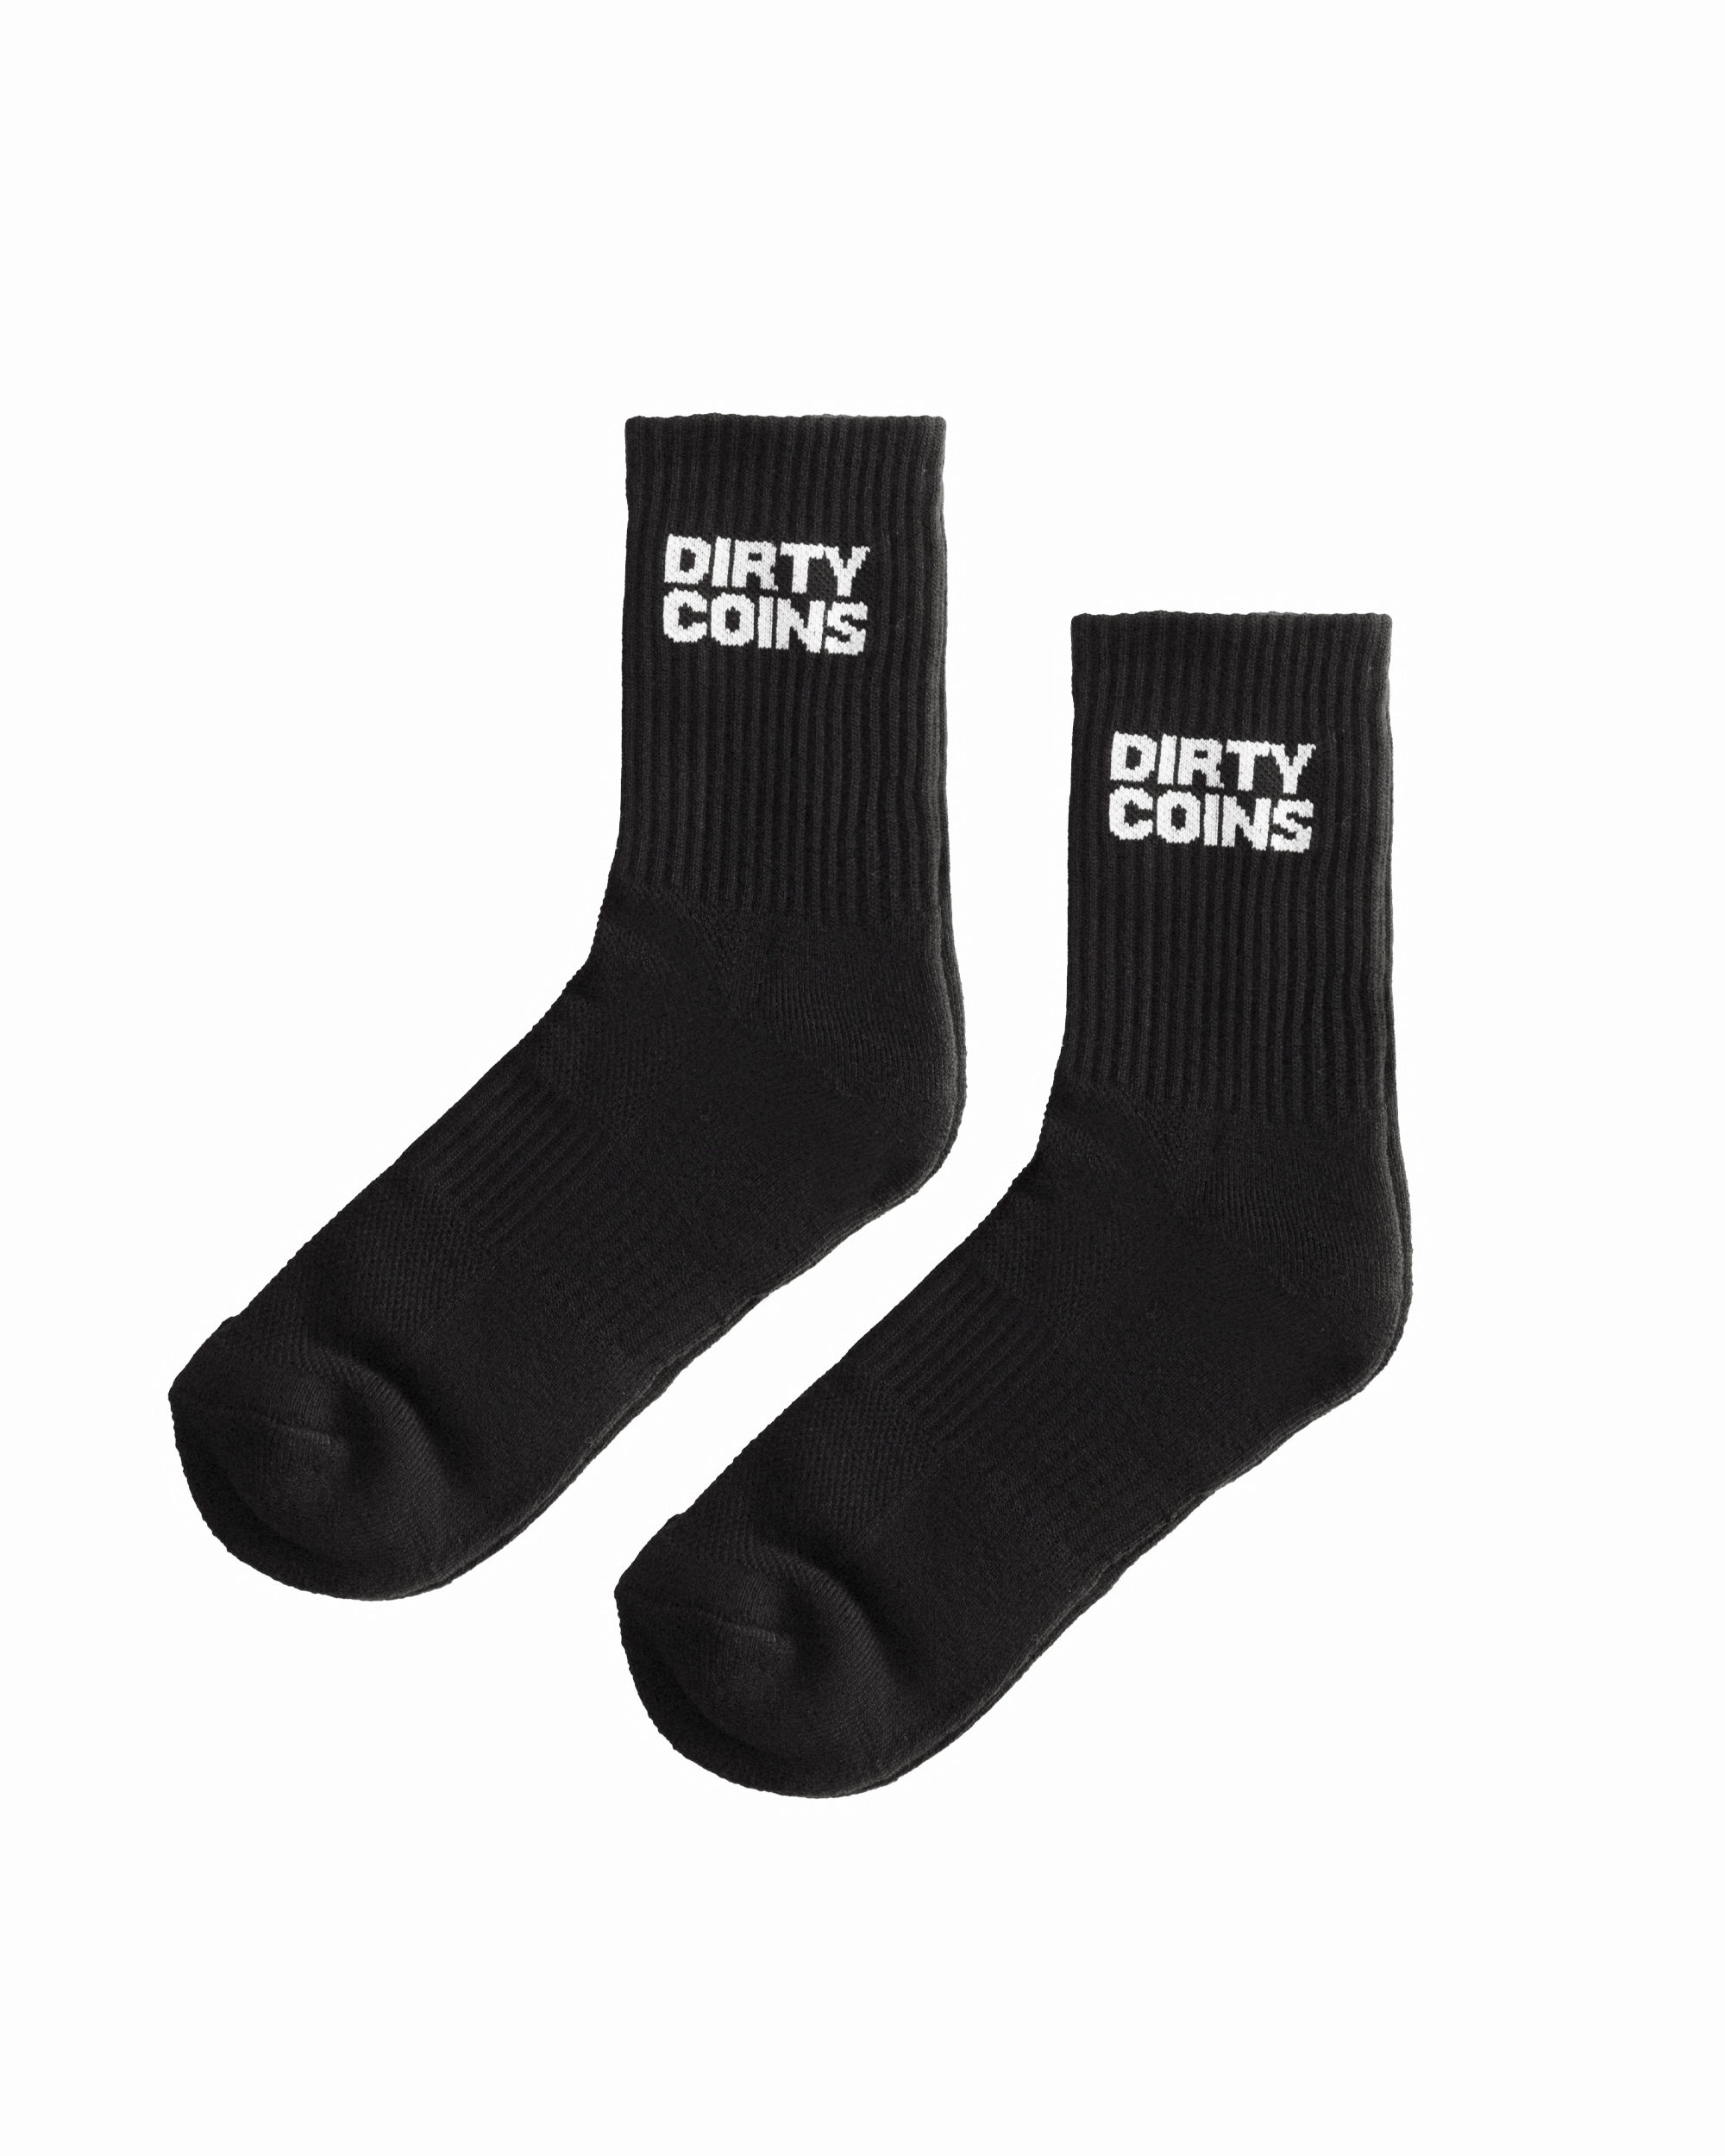 DirtyCoins Socks